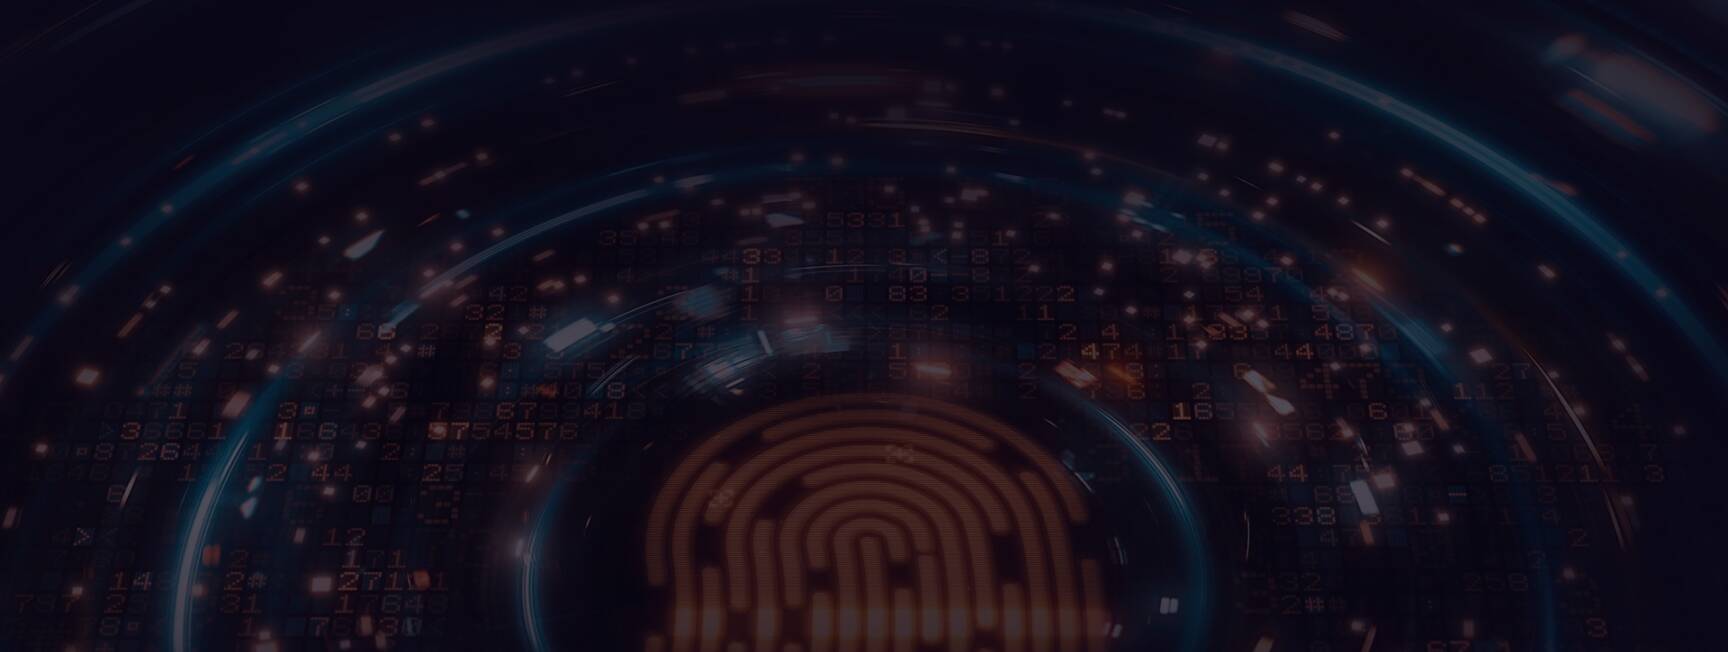 An image of a fingerprint on a dark background